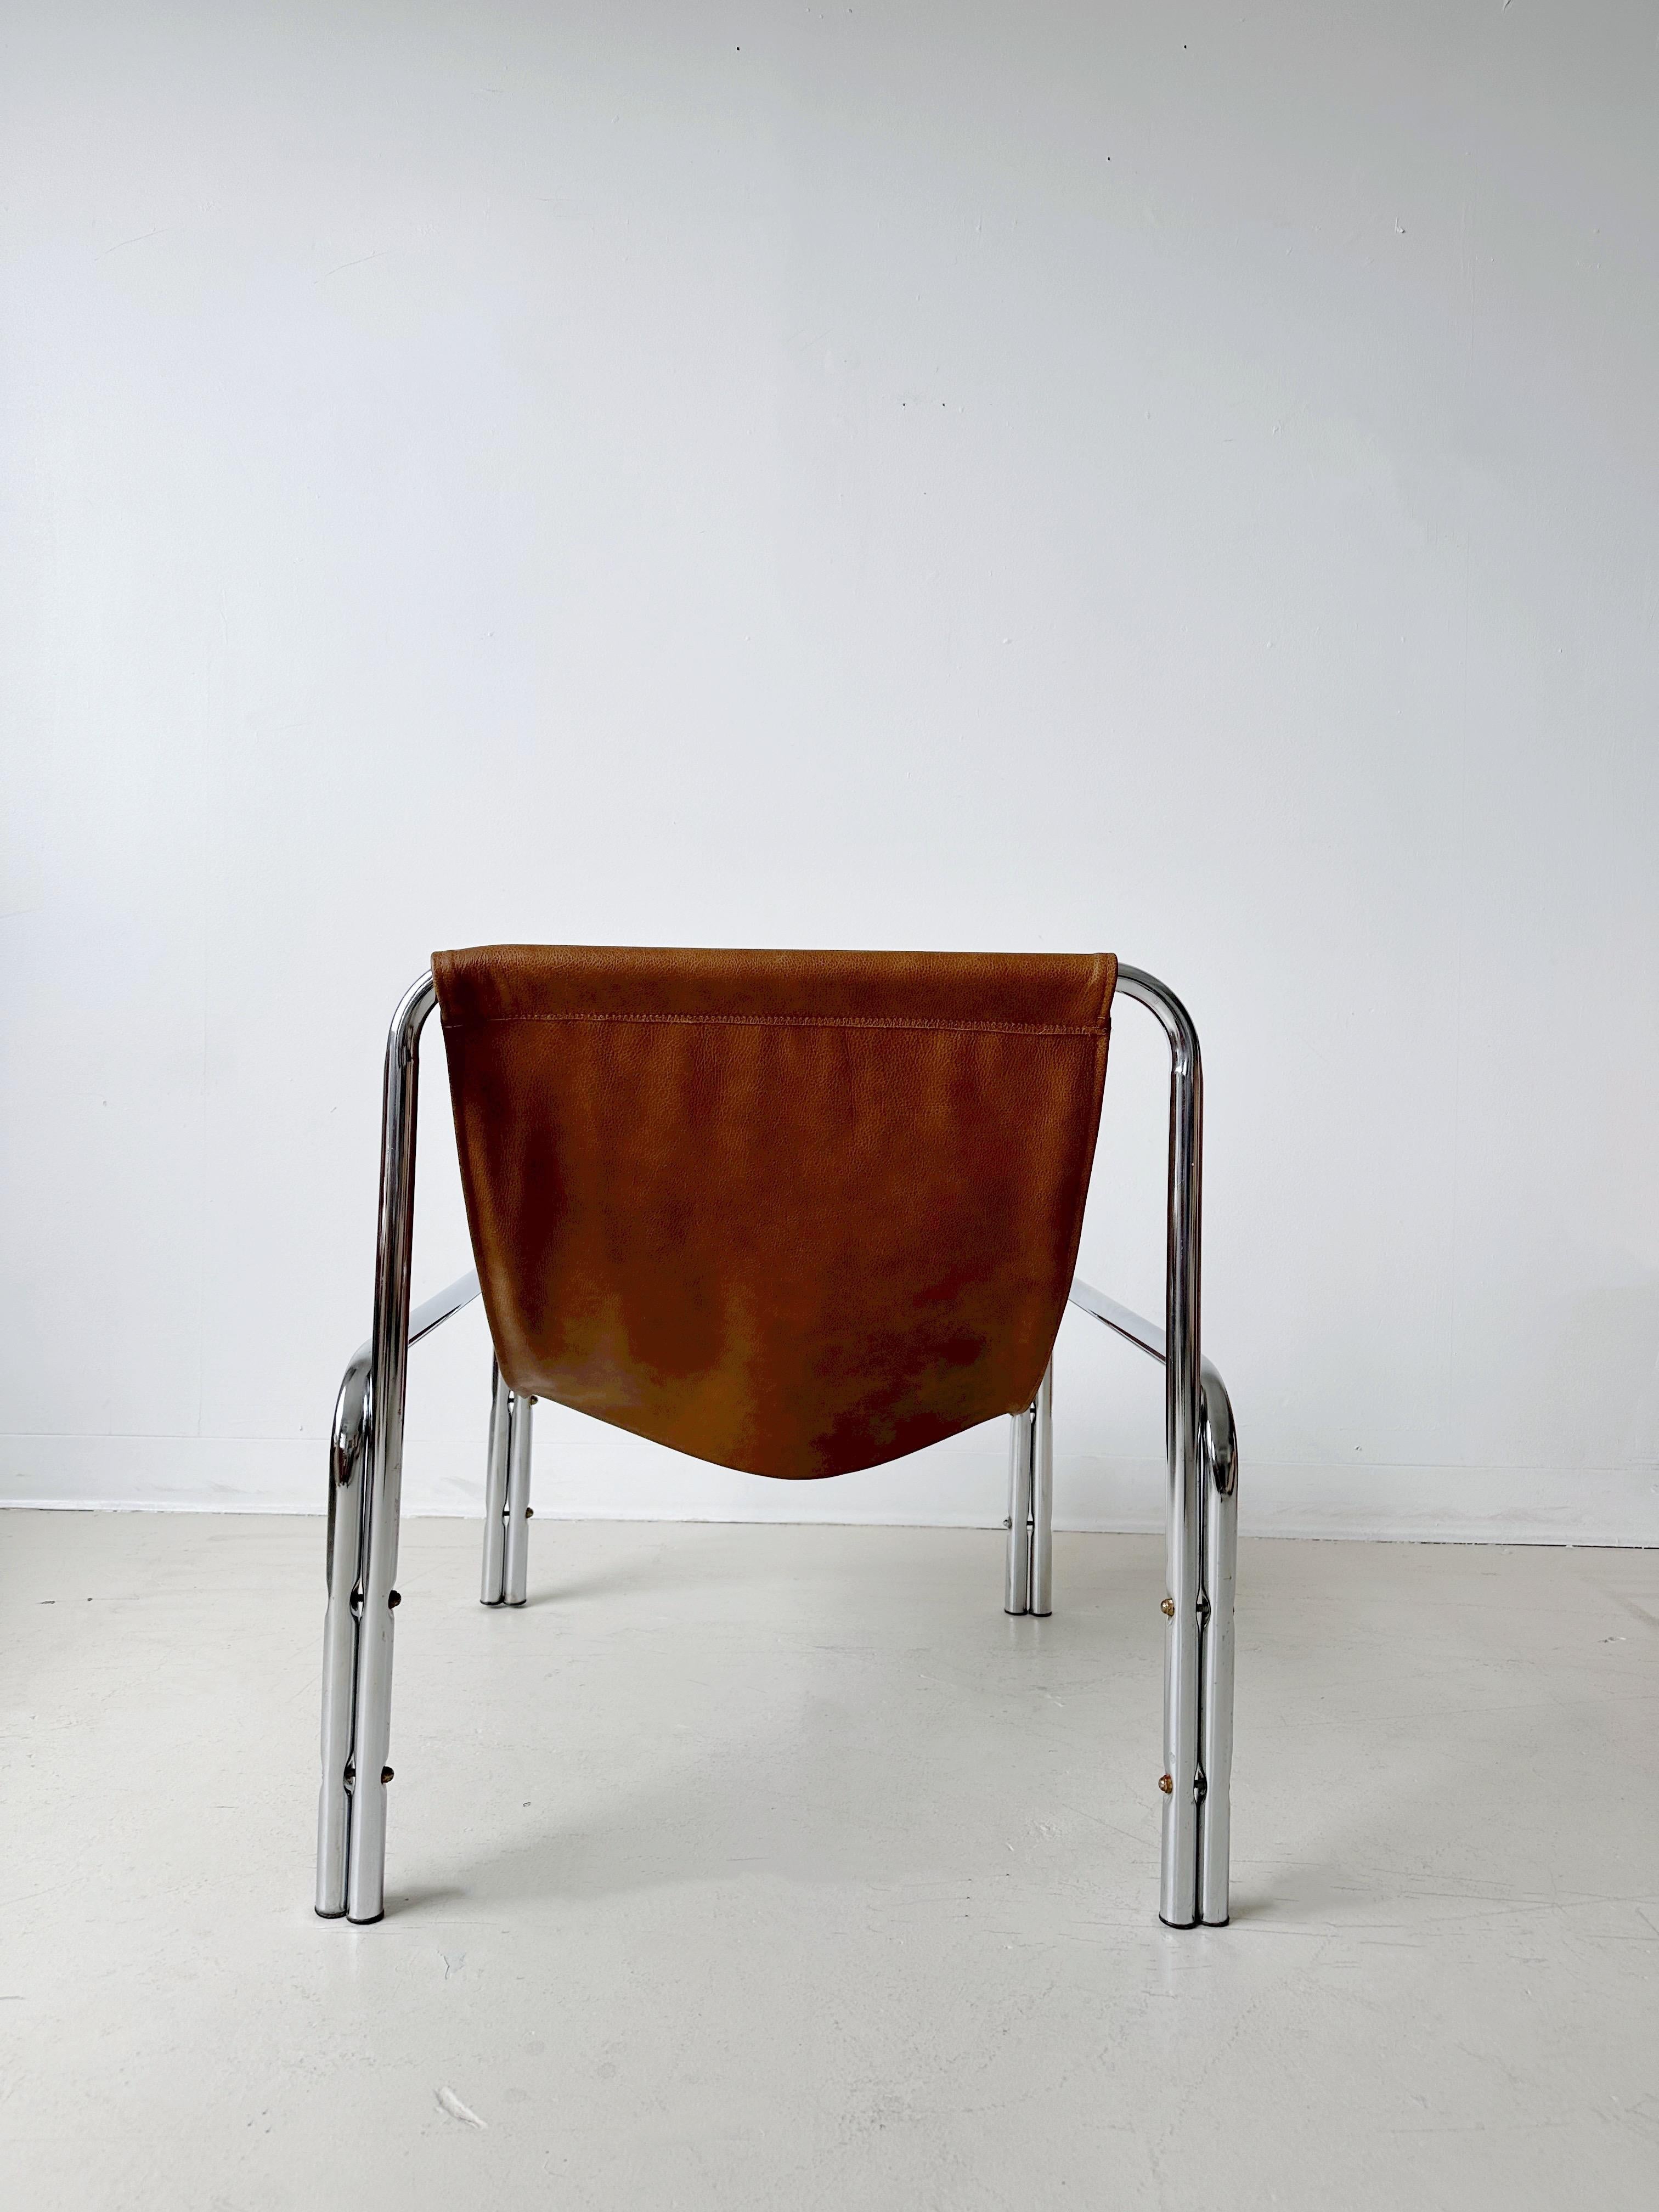 20th Century Tan Leather Sling Chair with Tubular Chrome Frame